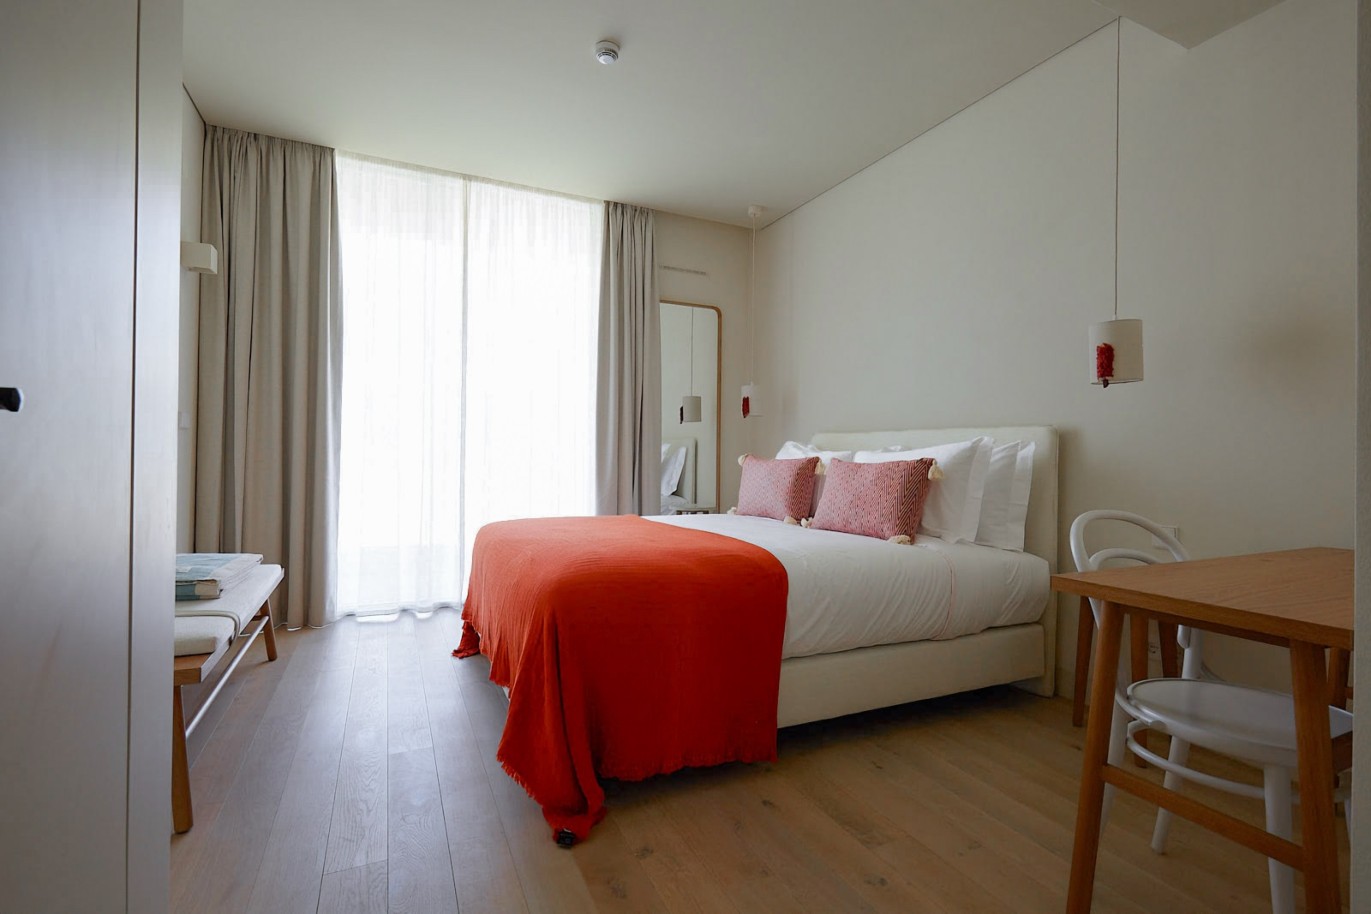 1 bedroom apartment in resort, for sale in Porches, Algarve_228982